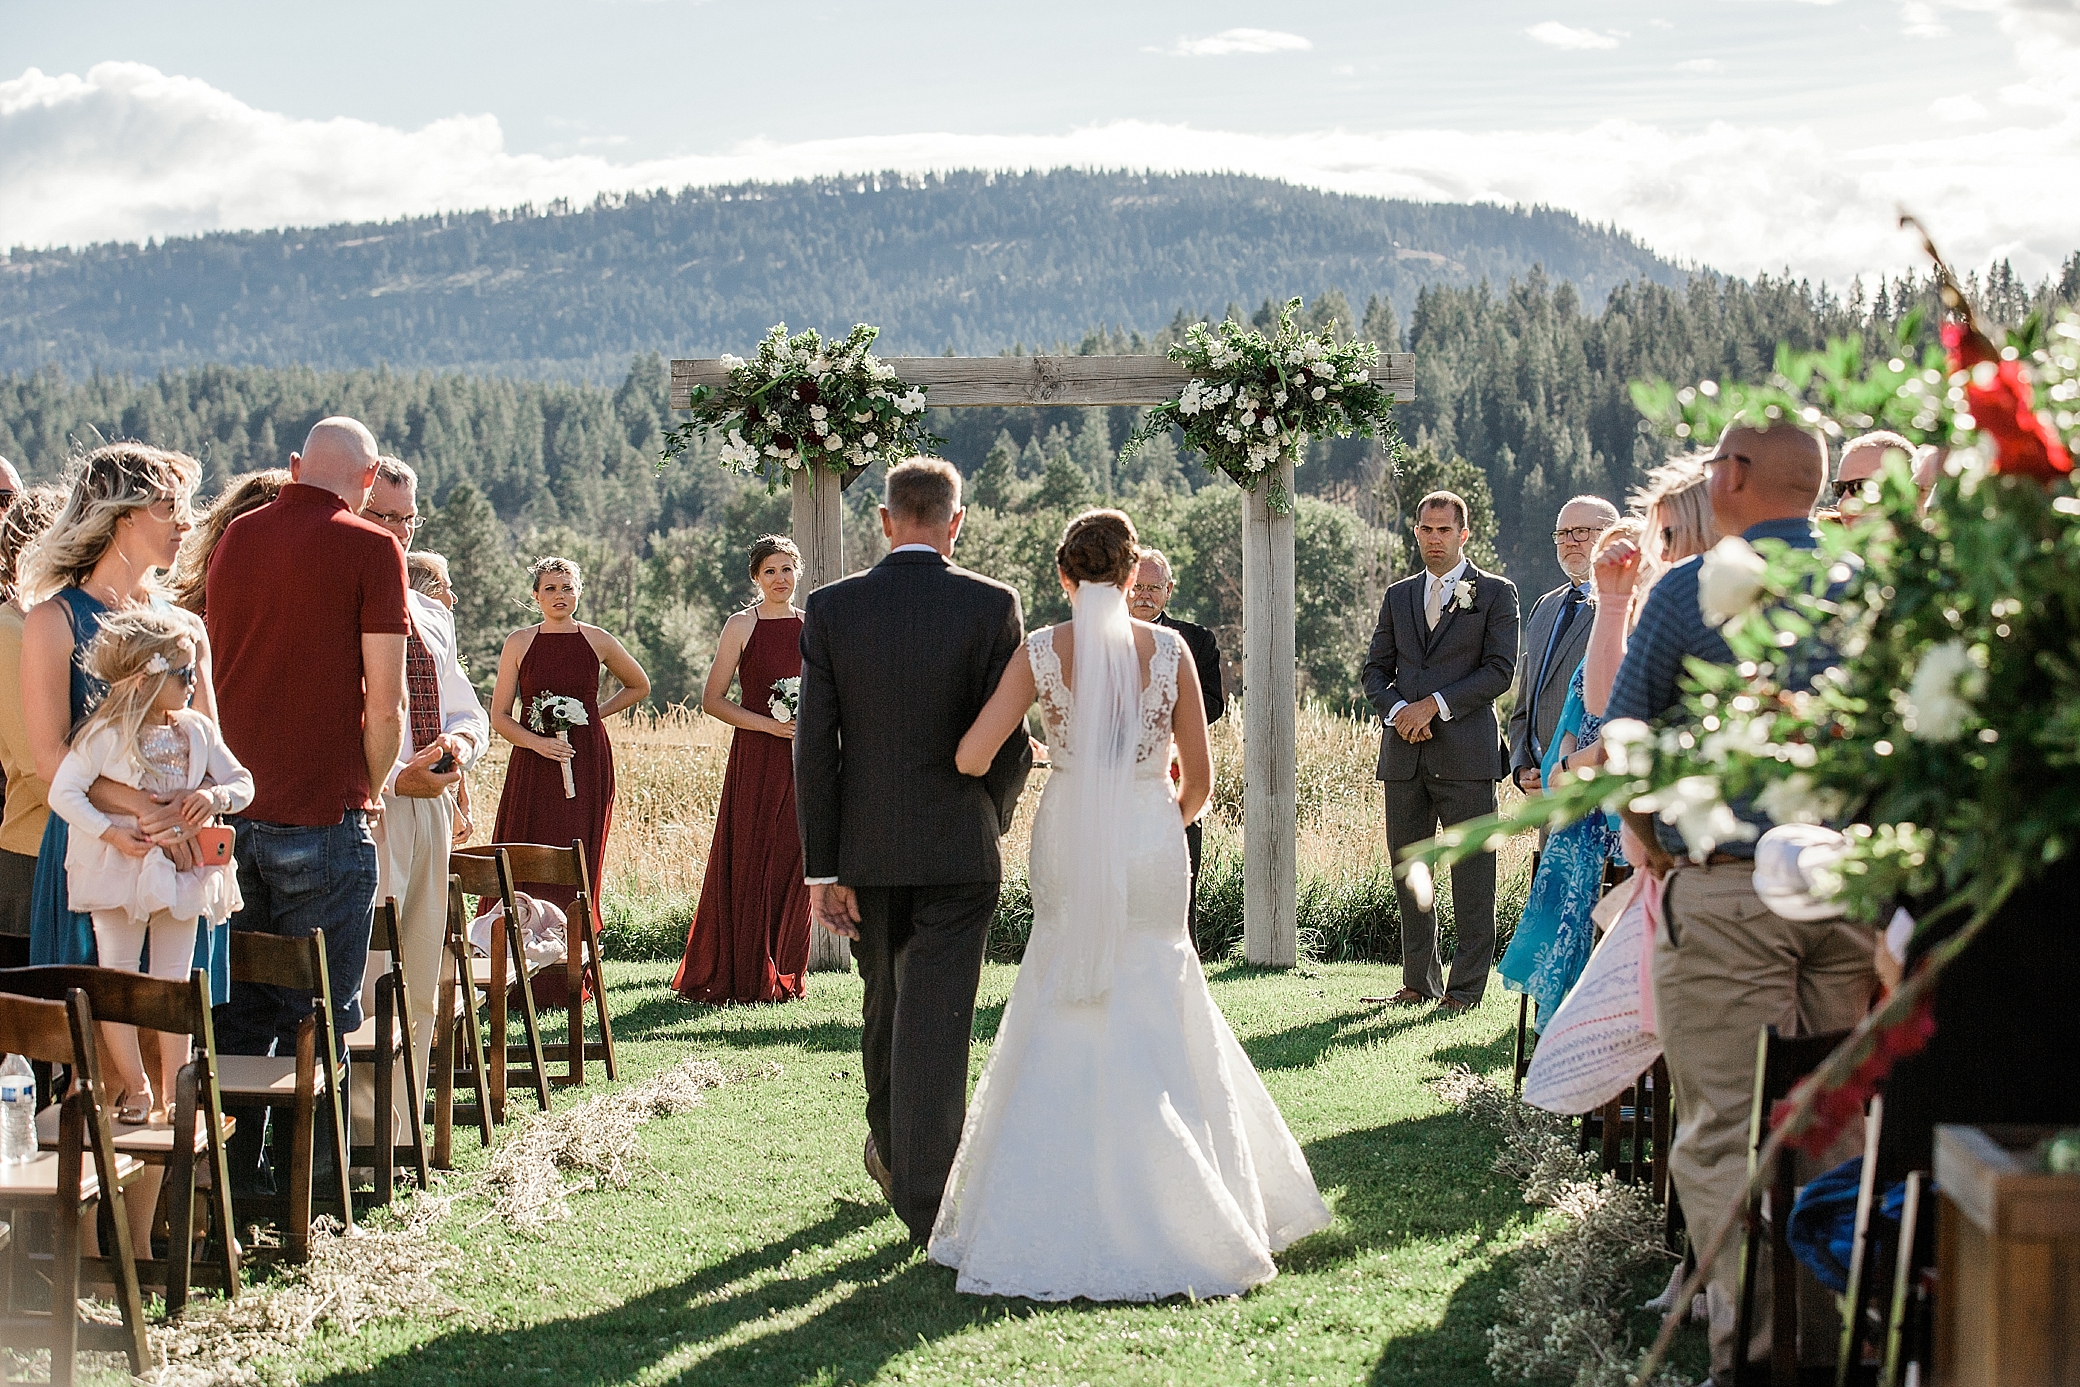 The Cattle Barn Wedding Venue Ceremony | Megan Montalvo Photography